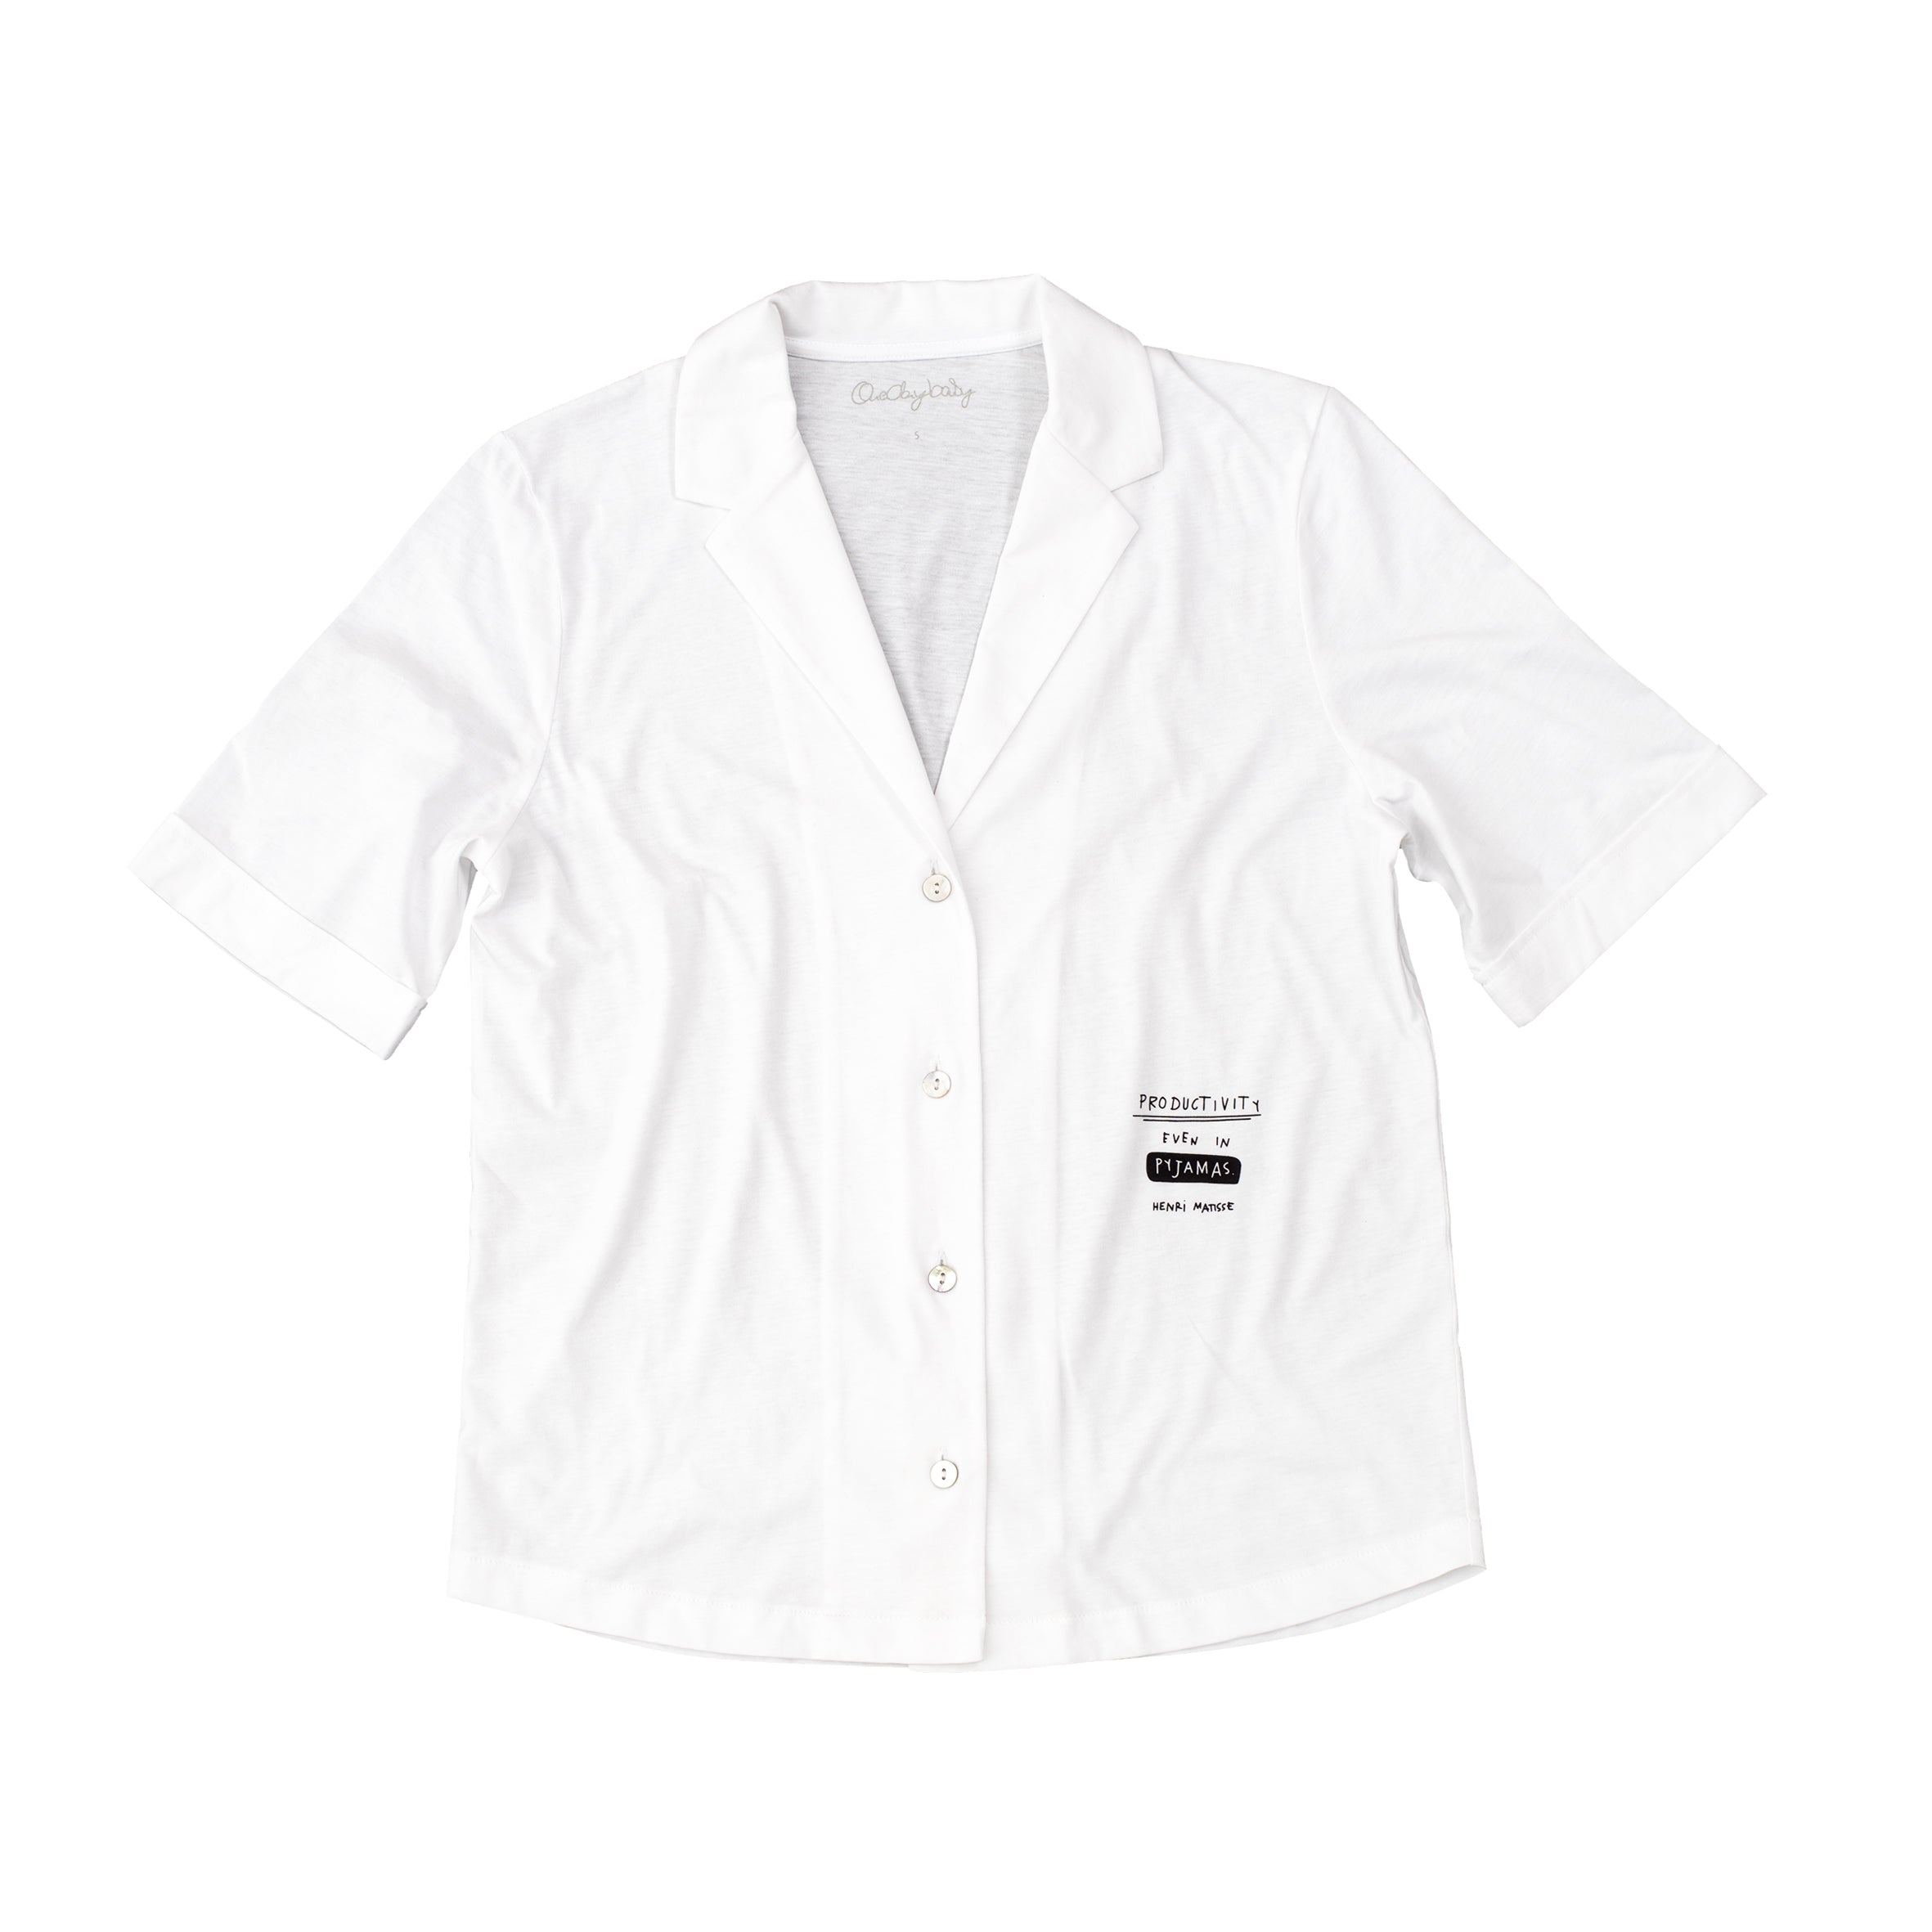 SALE - preppy Pyjama Top, bright white